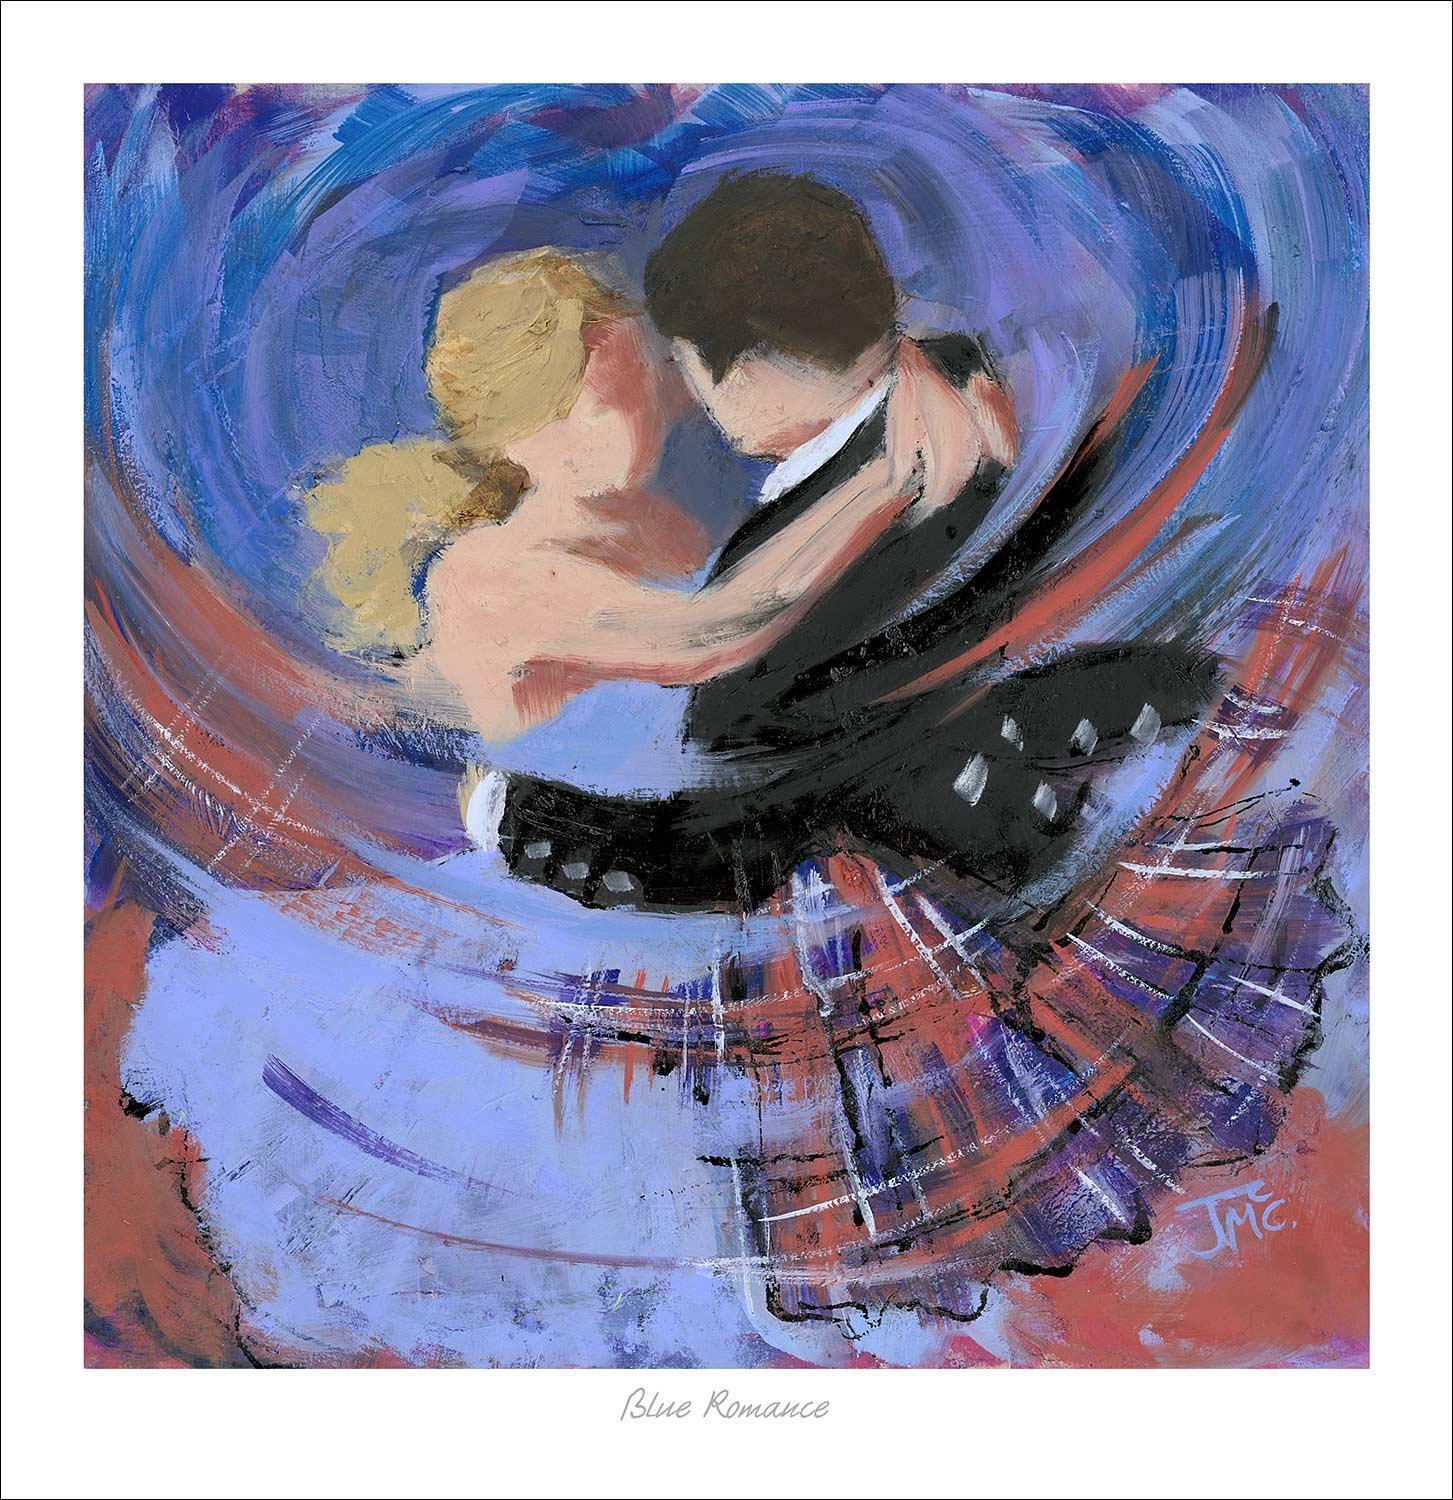 Blue Romance Art Print from an original painting by artist Janet McCrorie